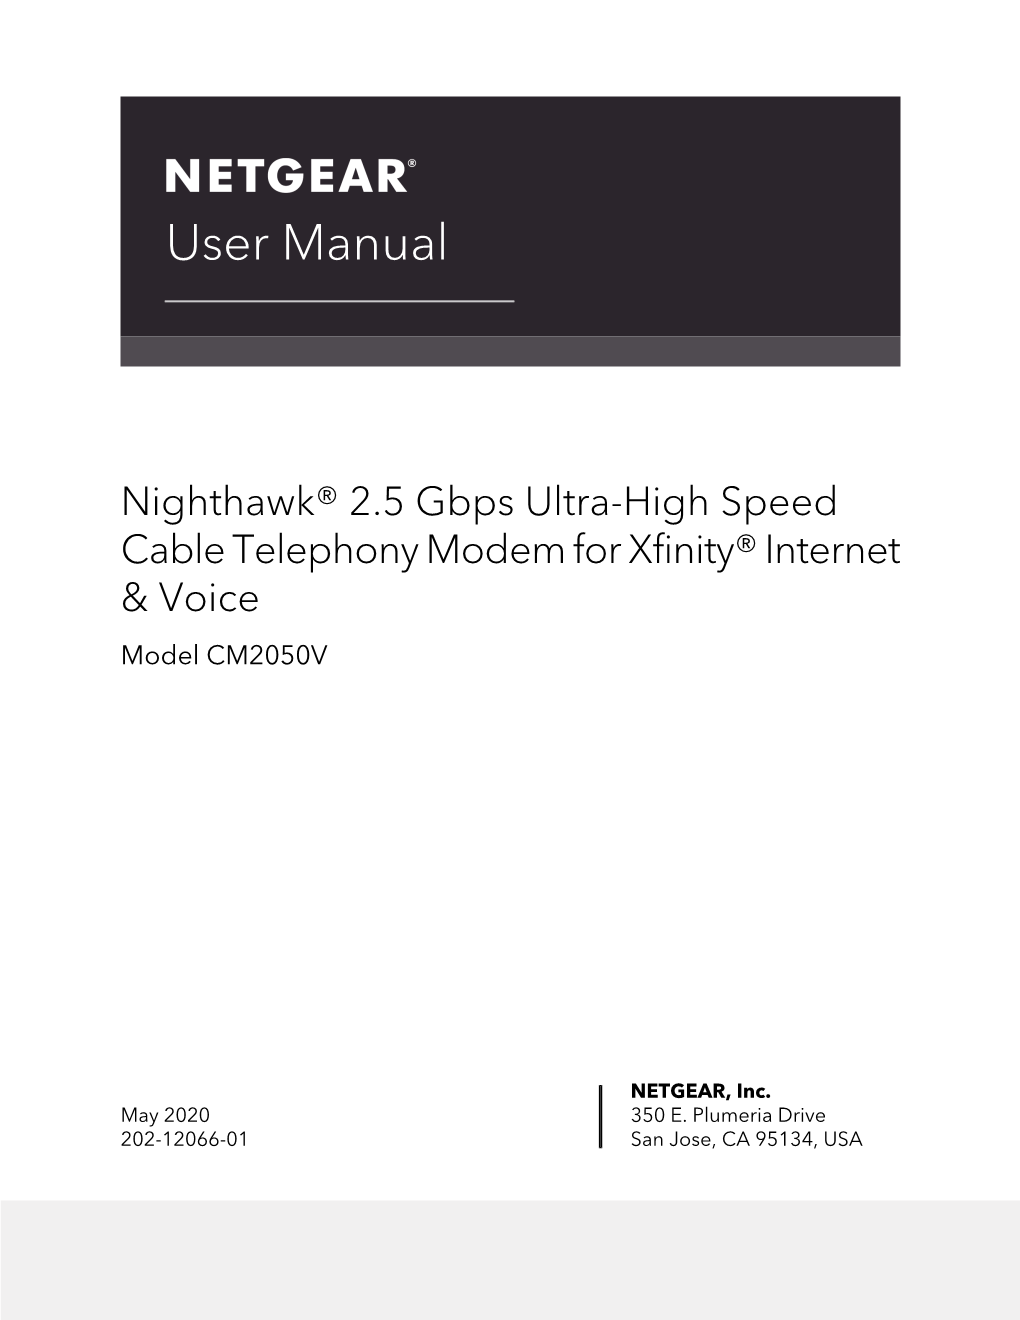 Nighthawk® 2.5 Gbps Ultra-High Speed Cable Telephony Modem for Xfinity® Internet & Voice Model CM2050V